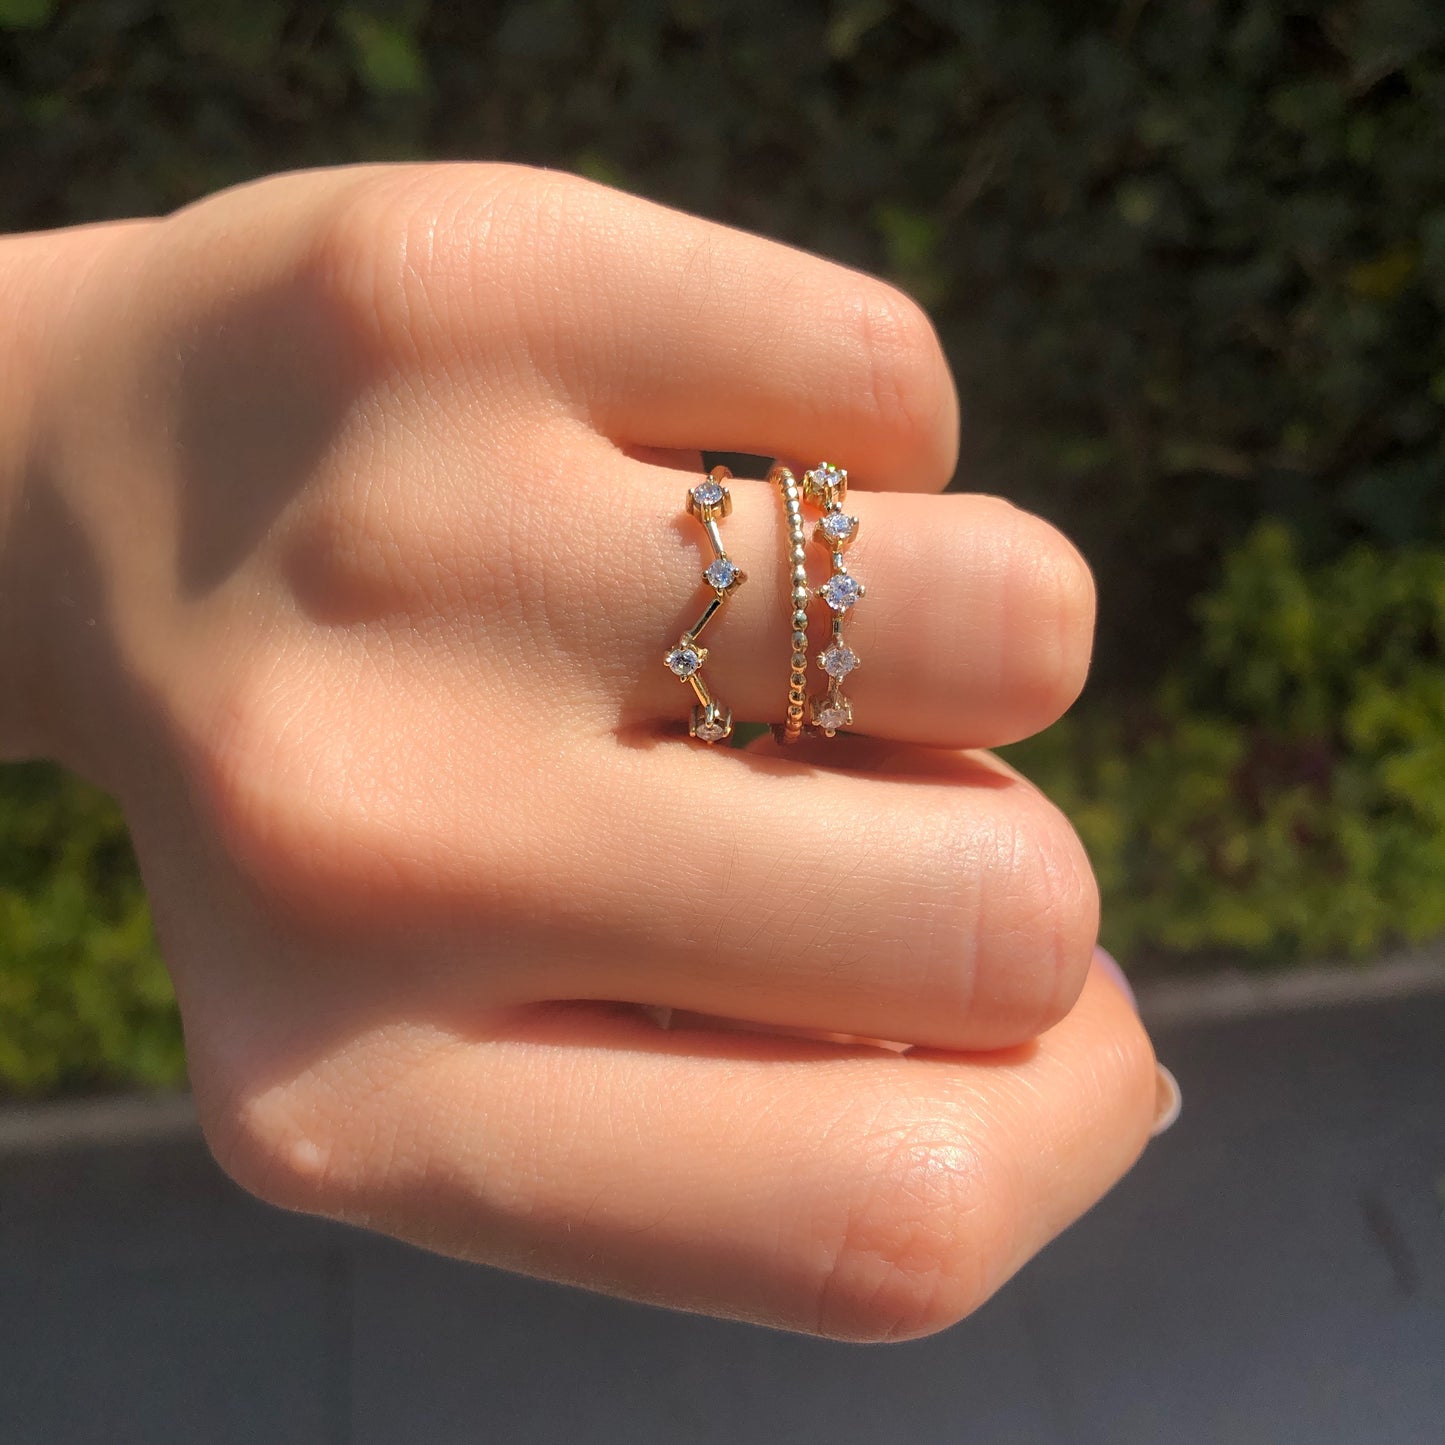 Marlena Diamond Ring